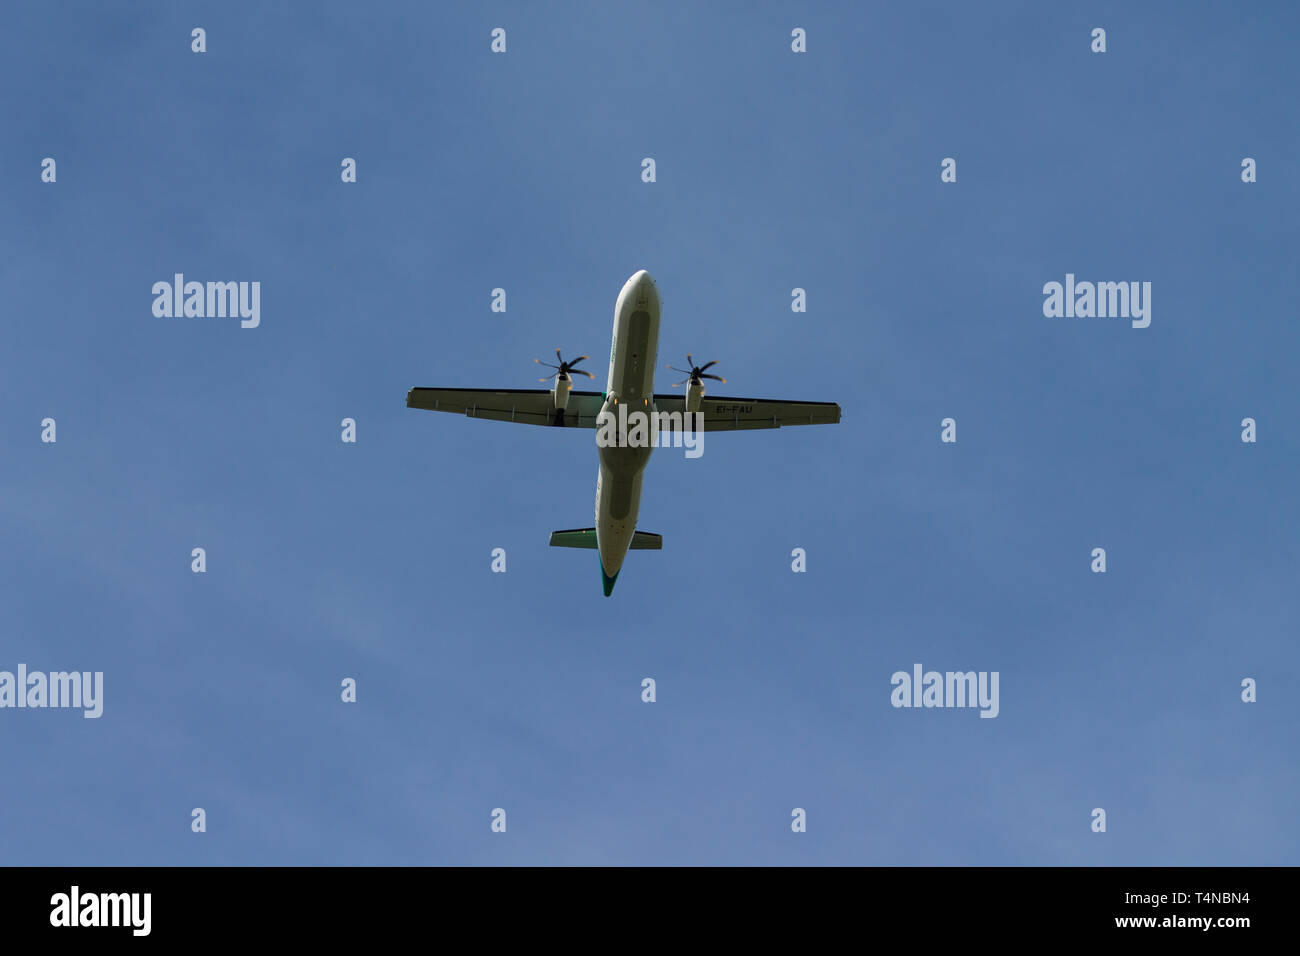 Air Lingus ATR Turbo Prop taking off Stock Photo